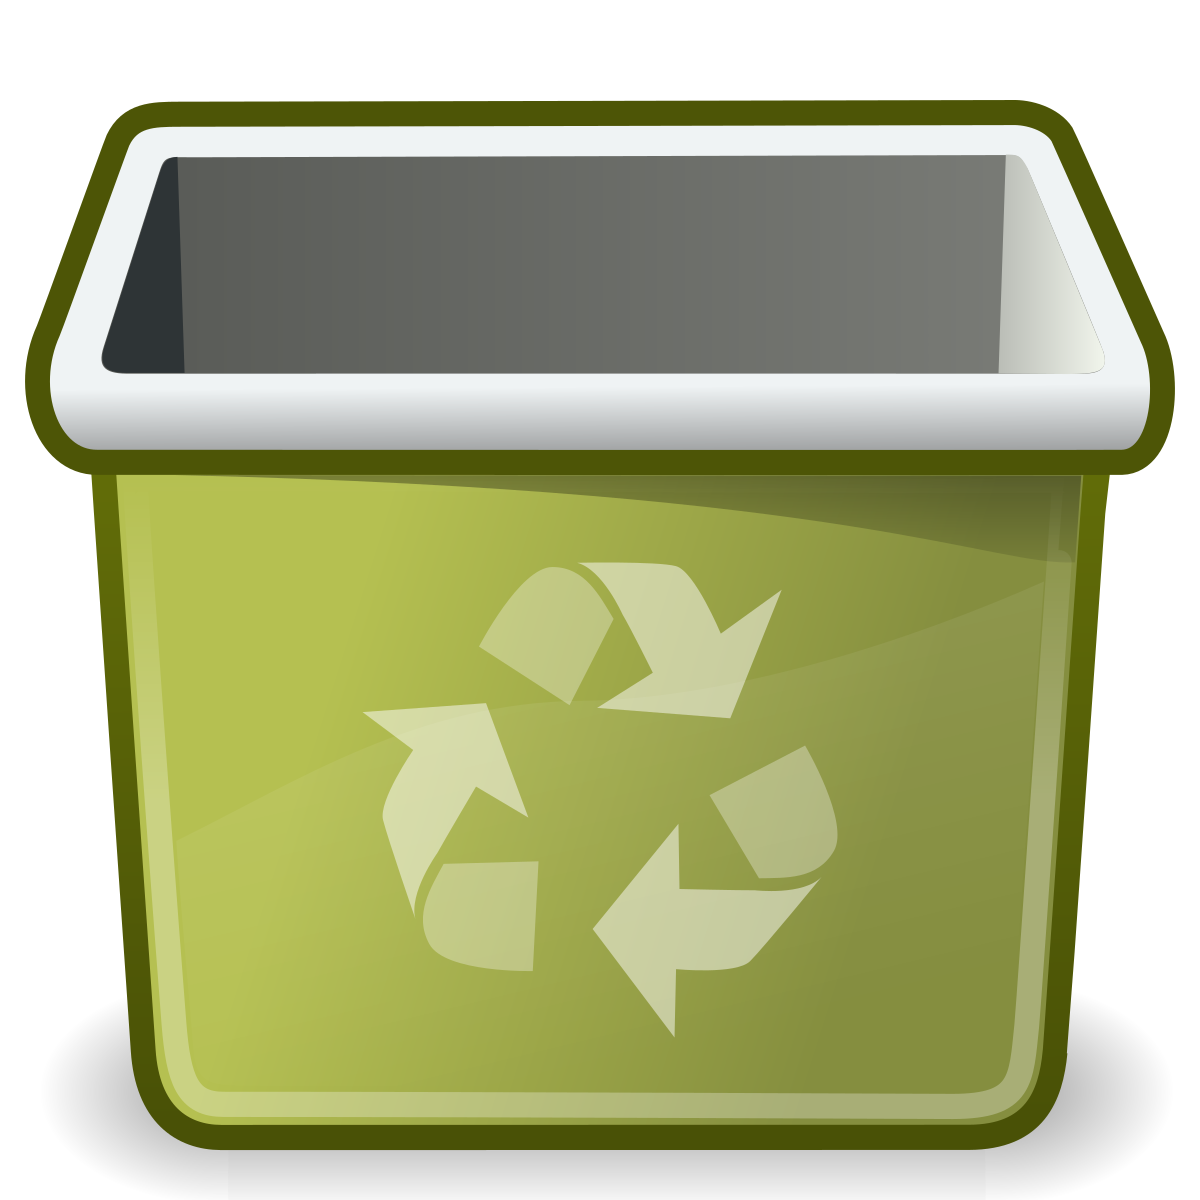 Google Drive trash can icon